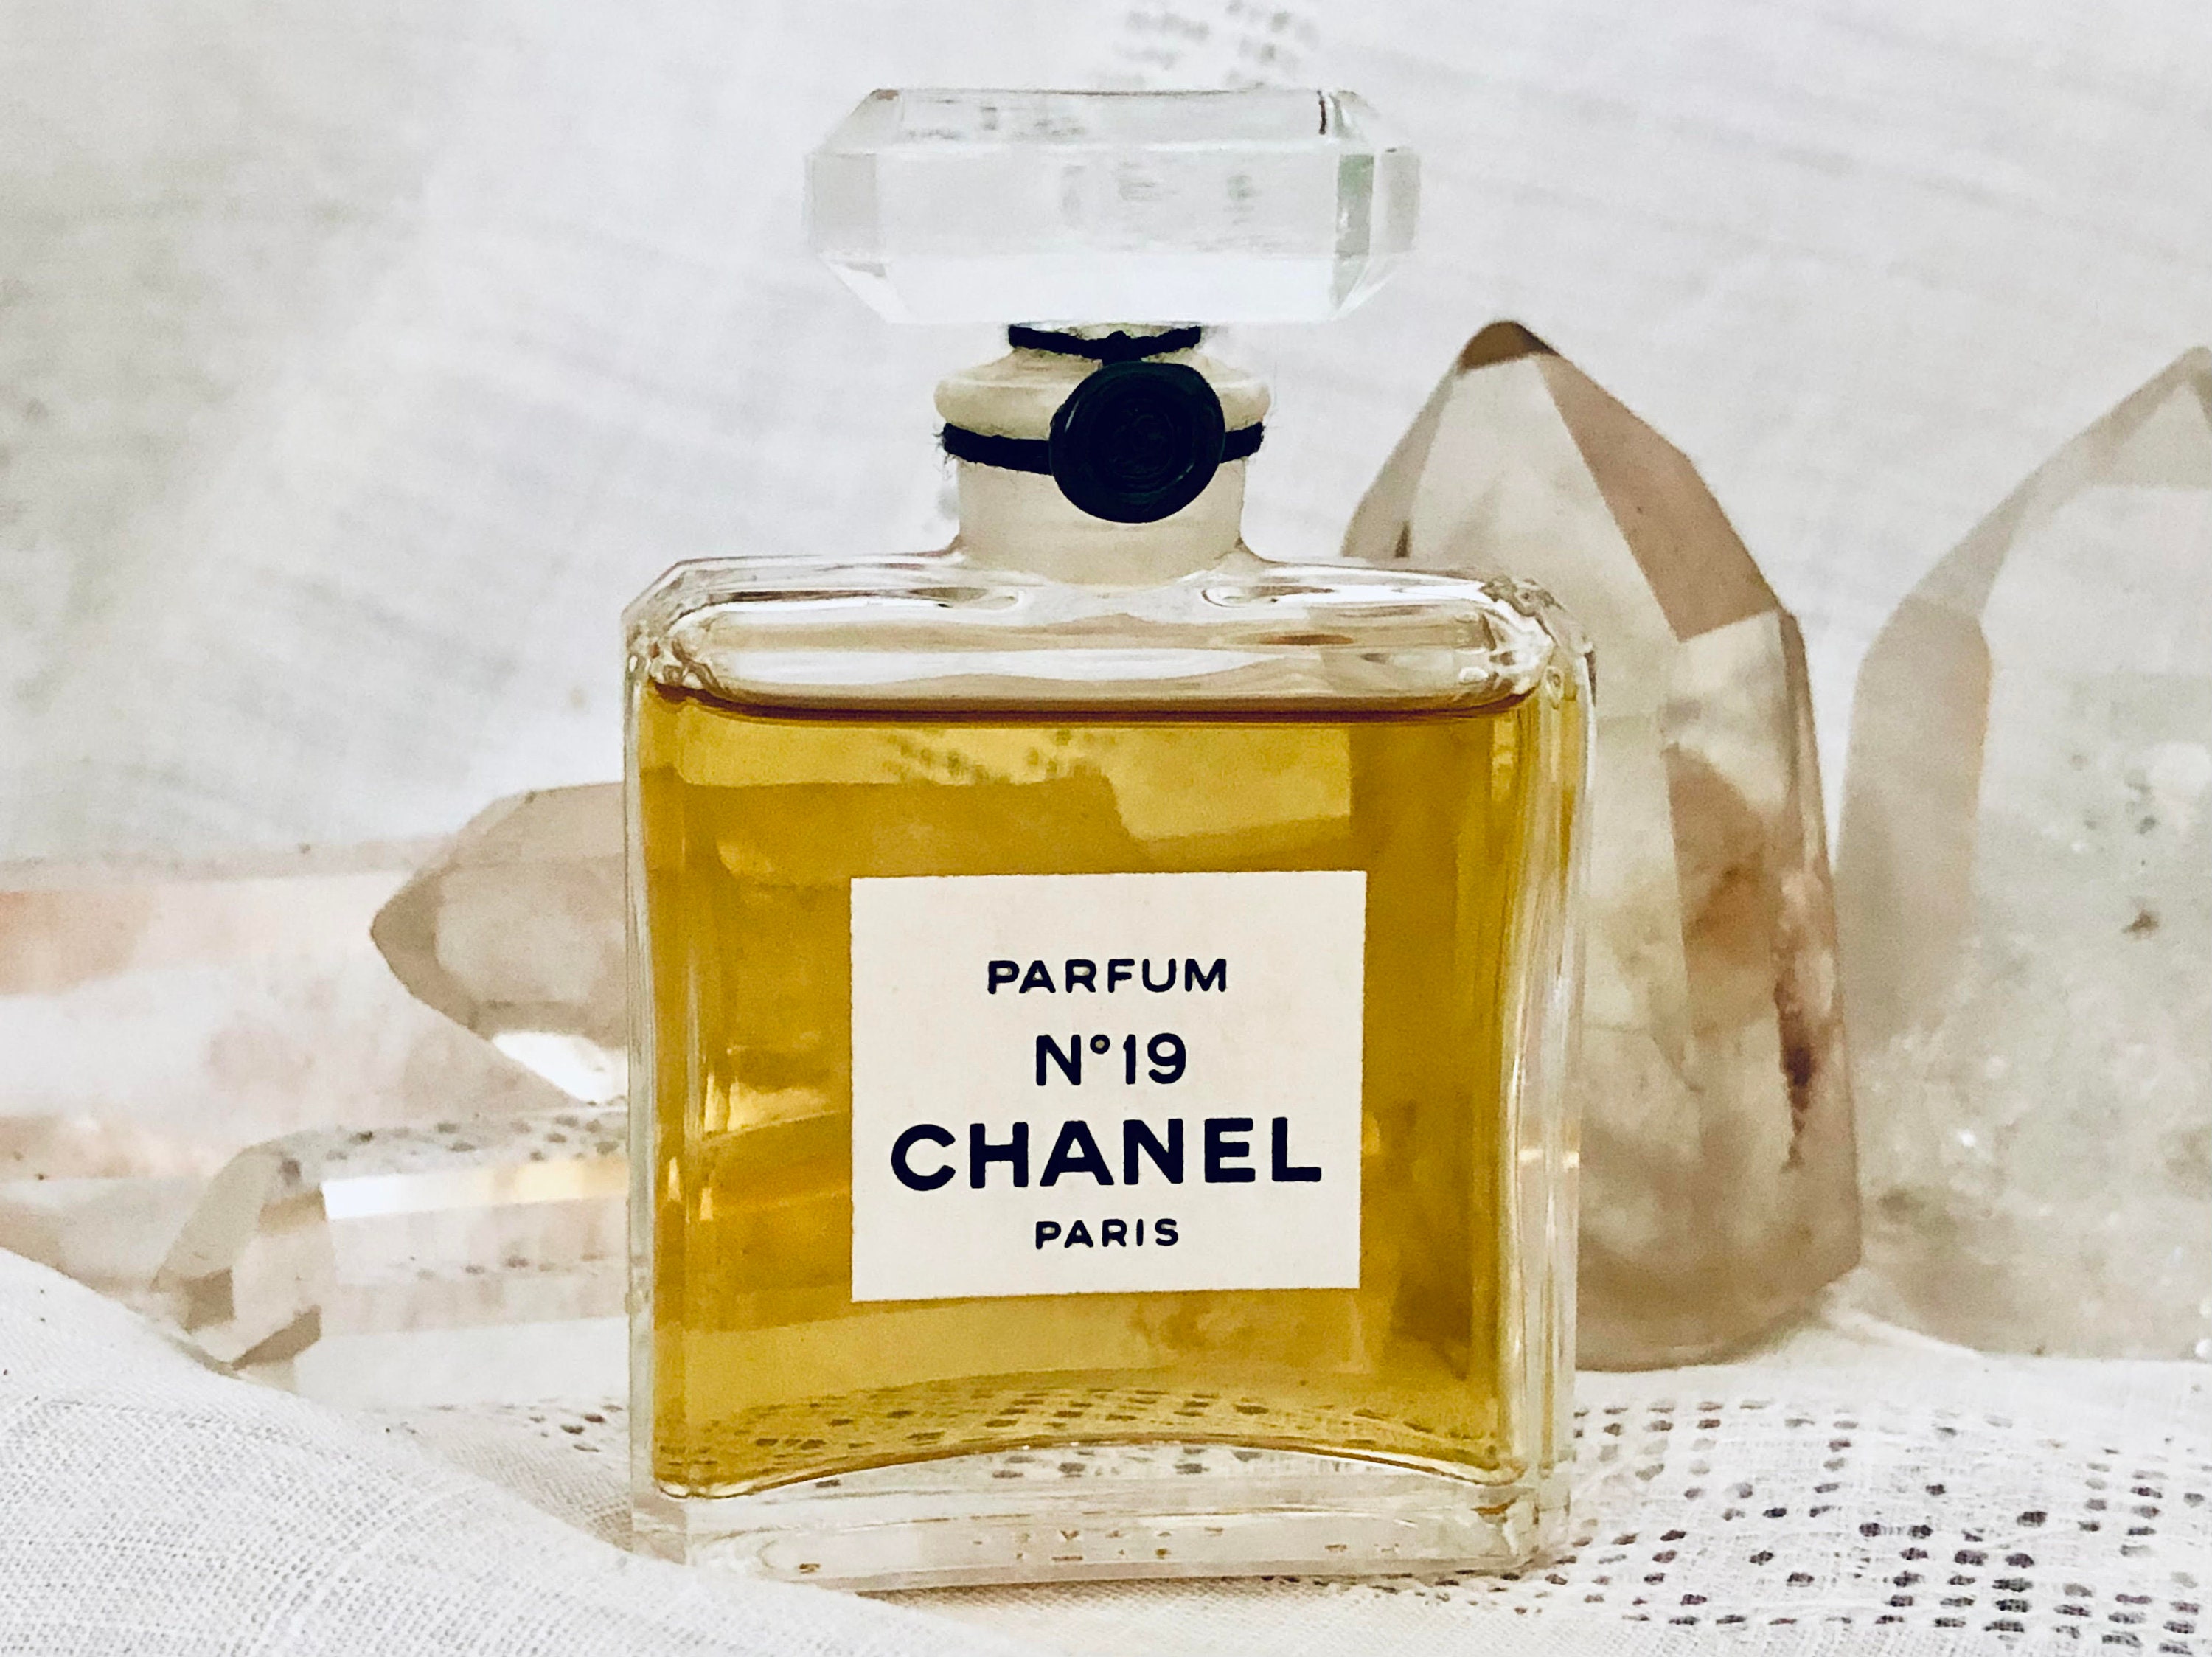 Chanel No. 19 15 ml. or 0.5 oz. Flacon Parfum Extrait -  Portugal